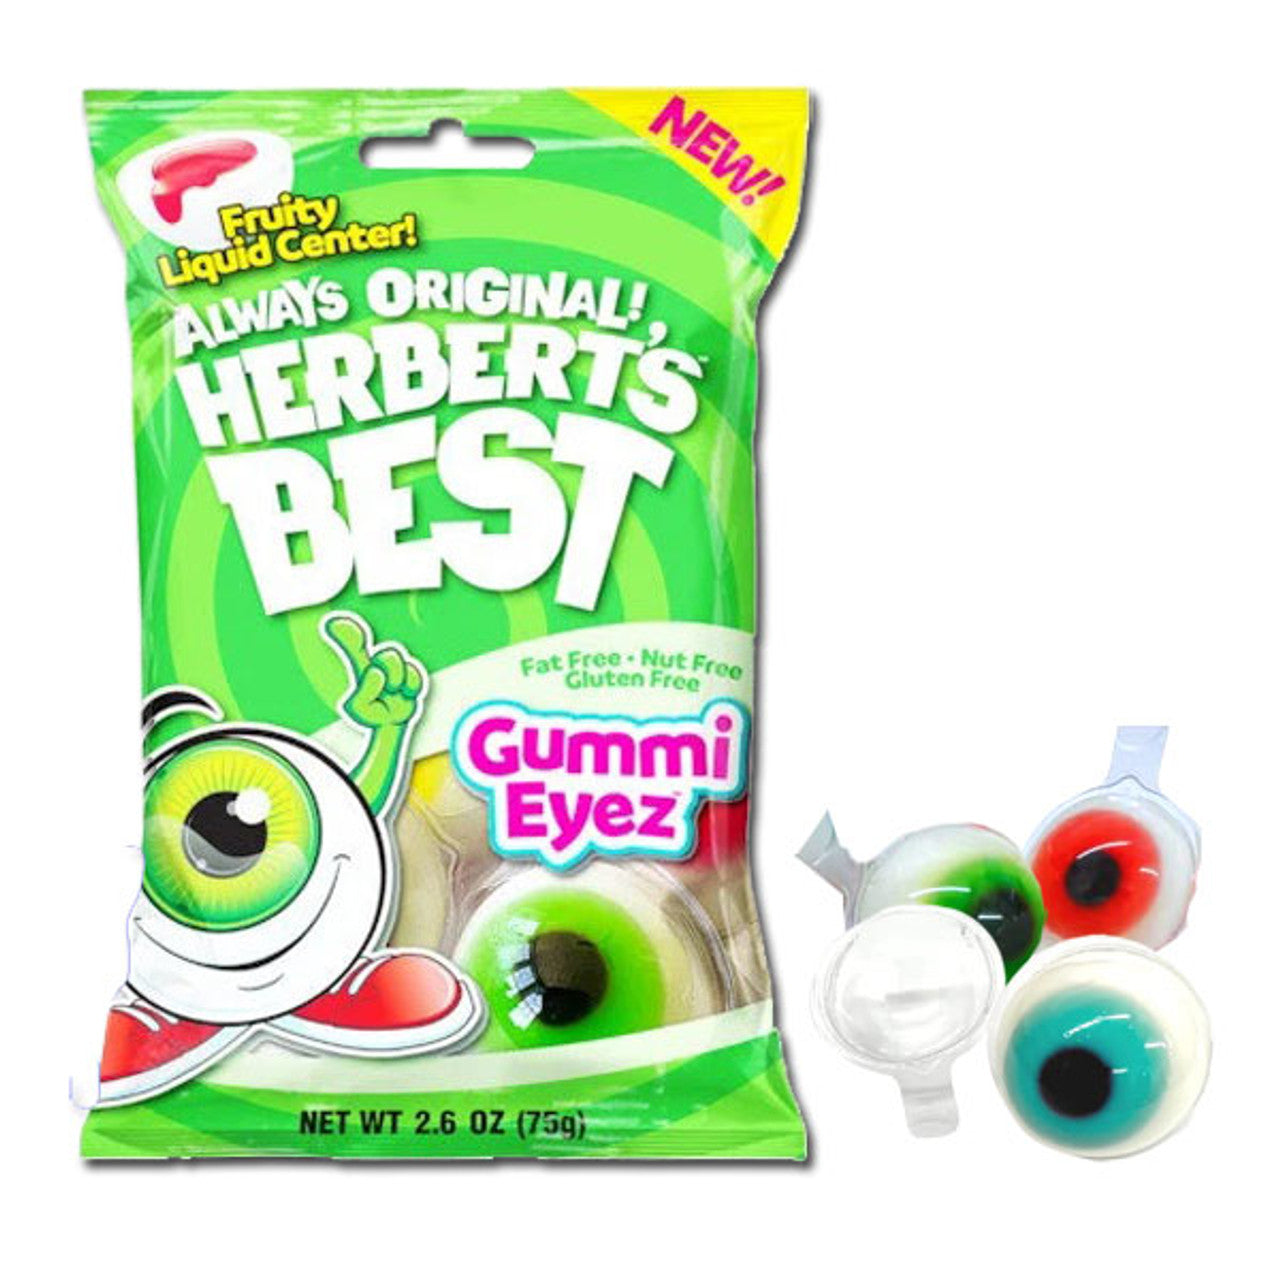 Herbert's Best Gummi Eyez 2.6oz Bag